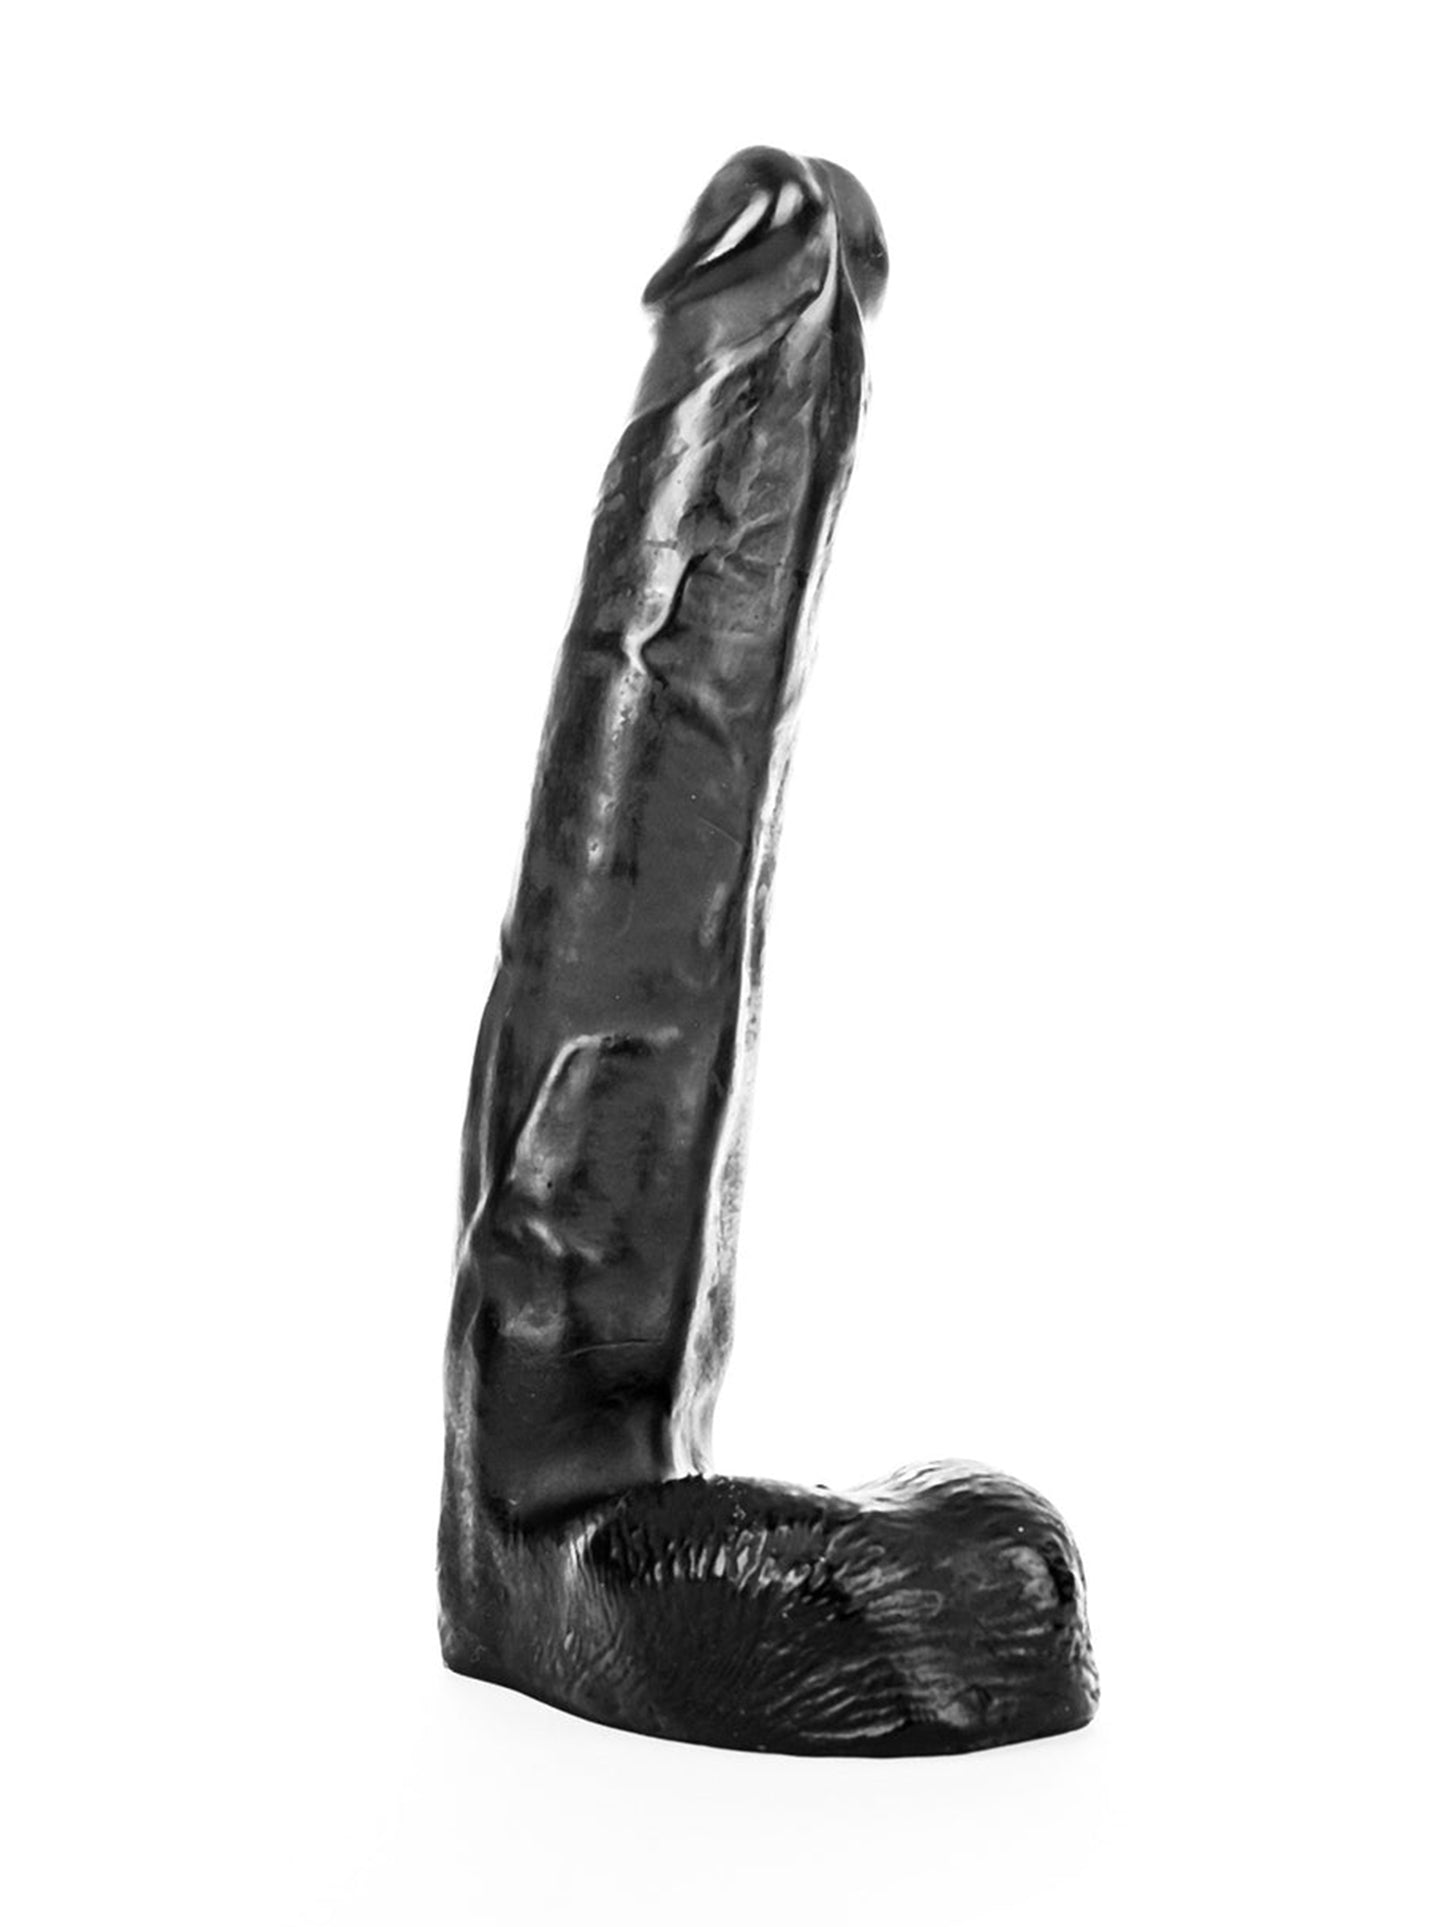 All Black - Dildo Pene Realistico Luis 20 cm